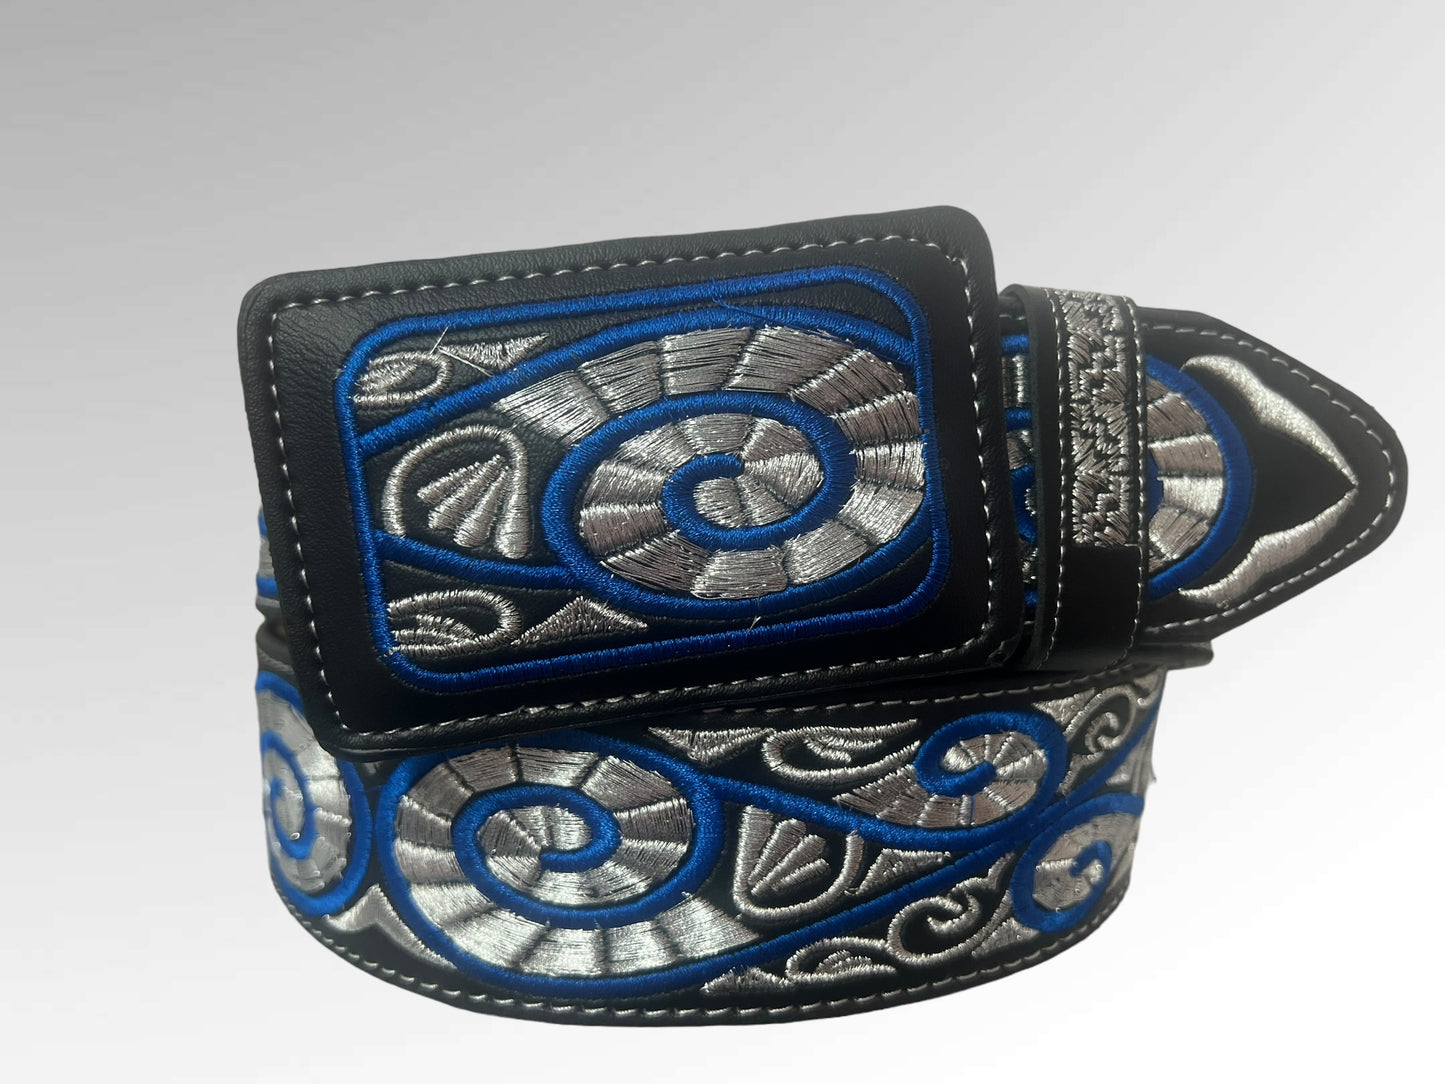 Cinto Bordado/Embroidered Belt